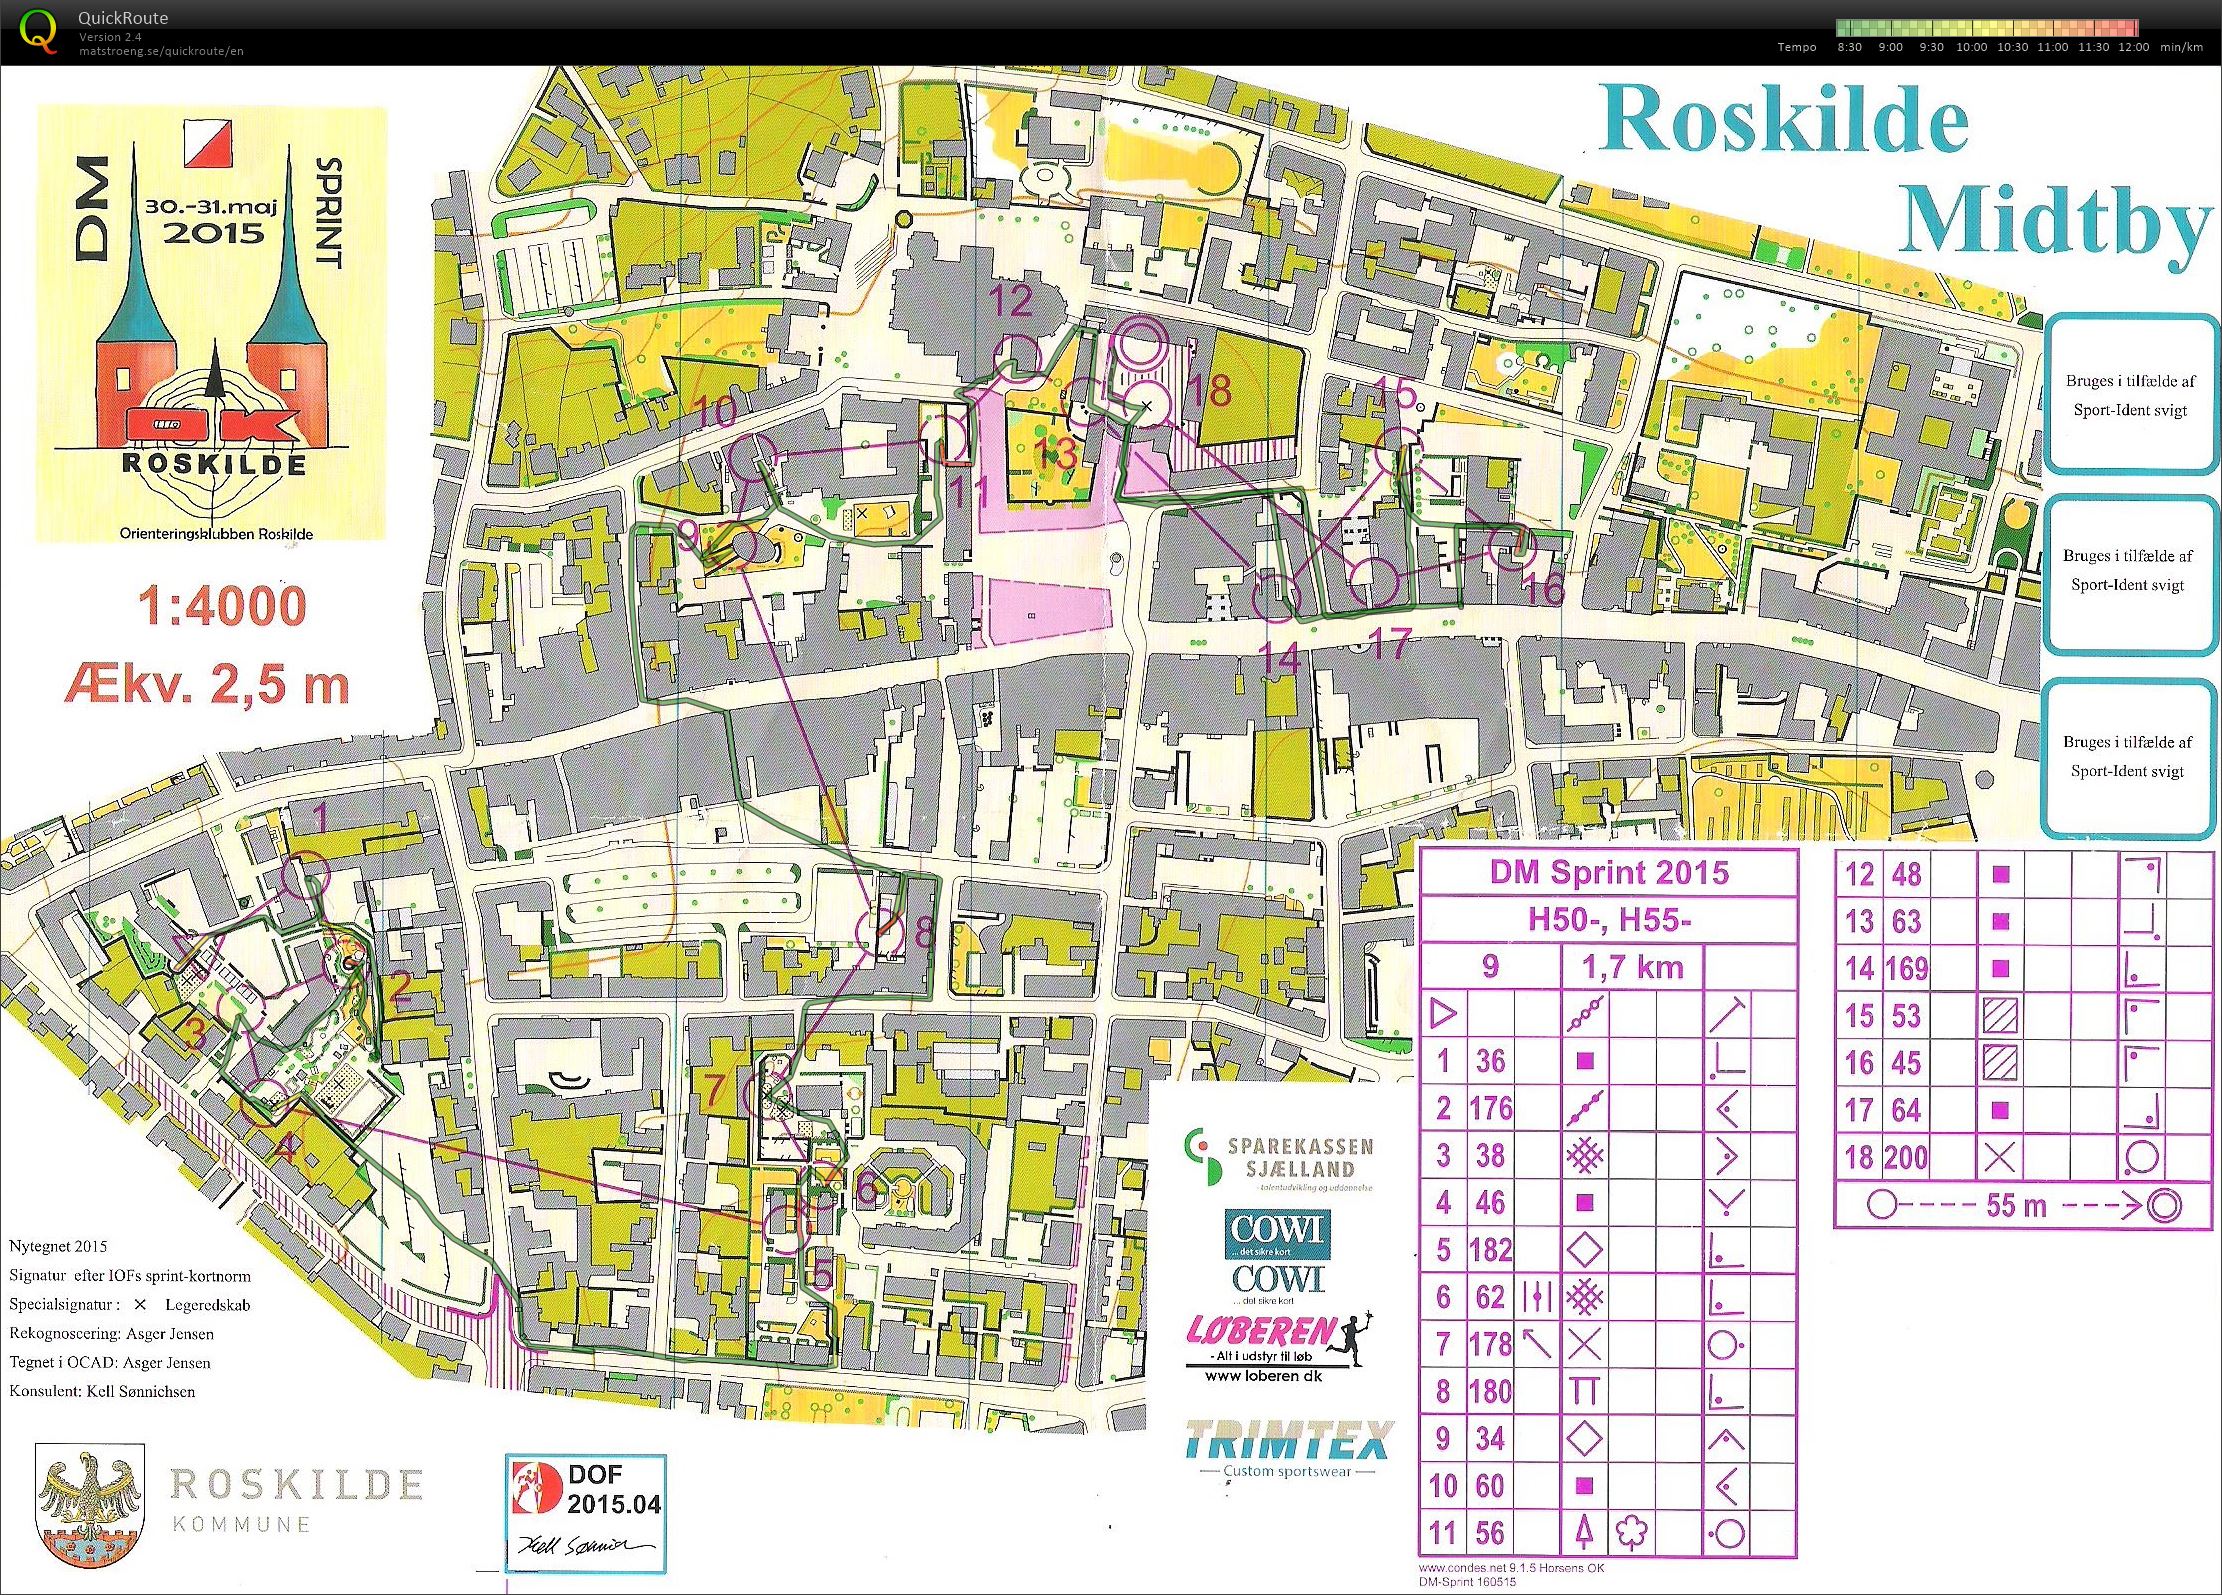 DM Sprint Roskilde Midtby H55 (2015-05-30)